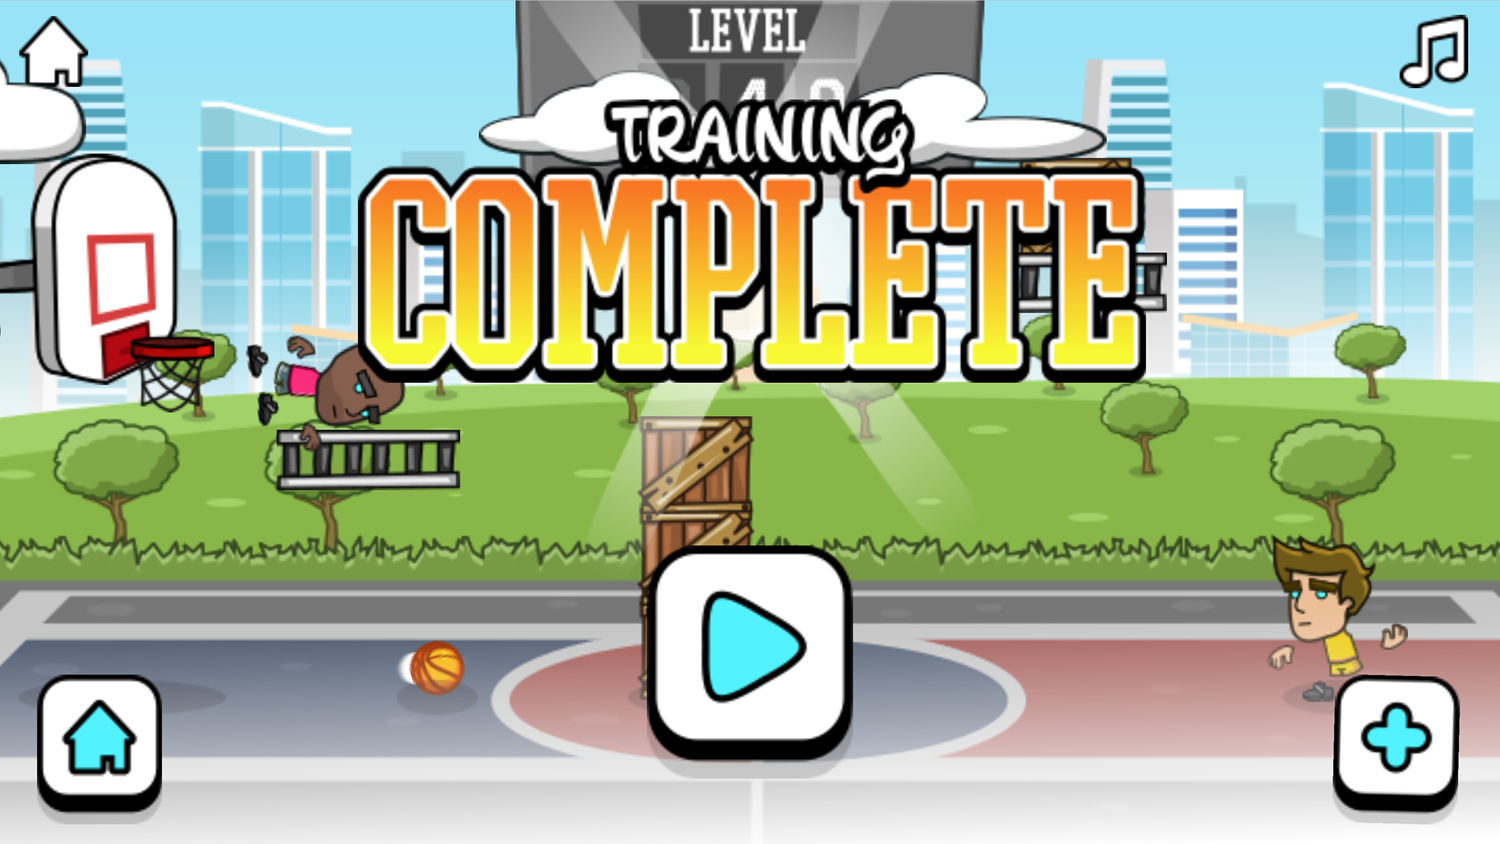 Street Dunk Game Training Level Complete Screen Screenshot.